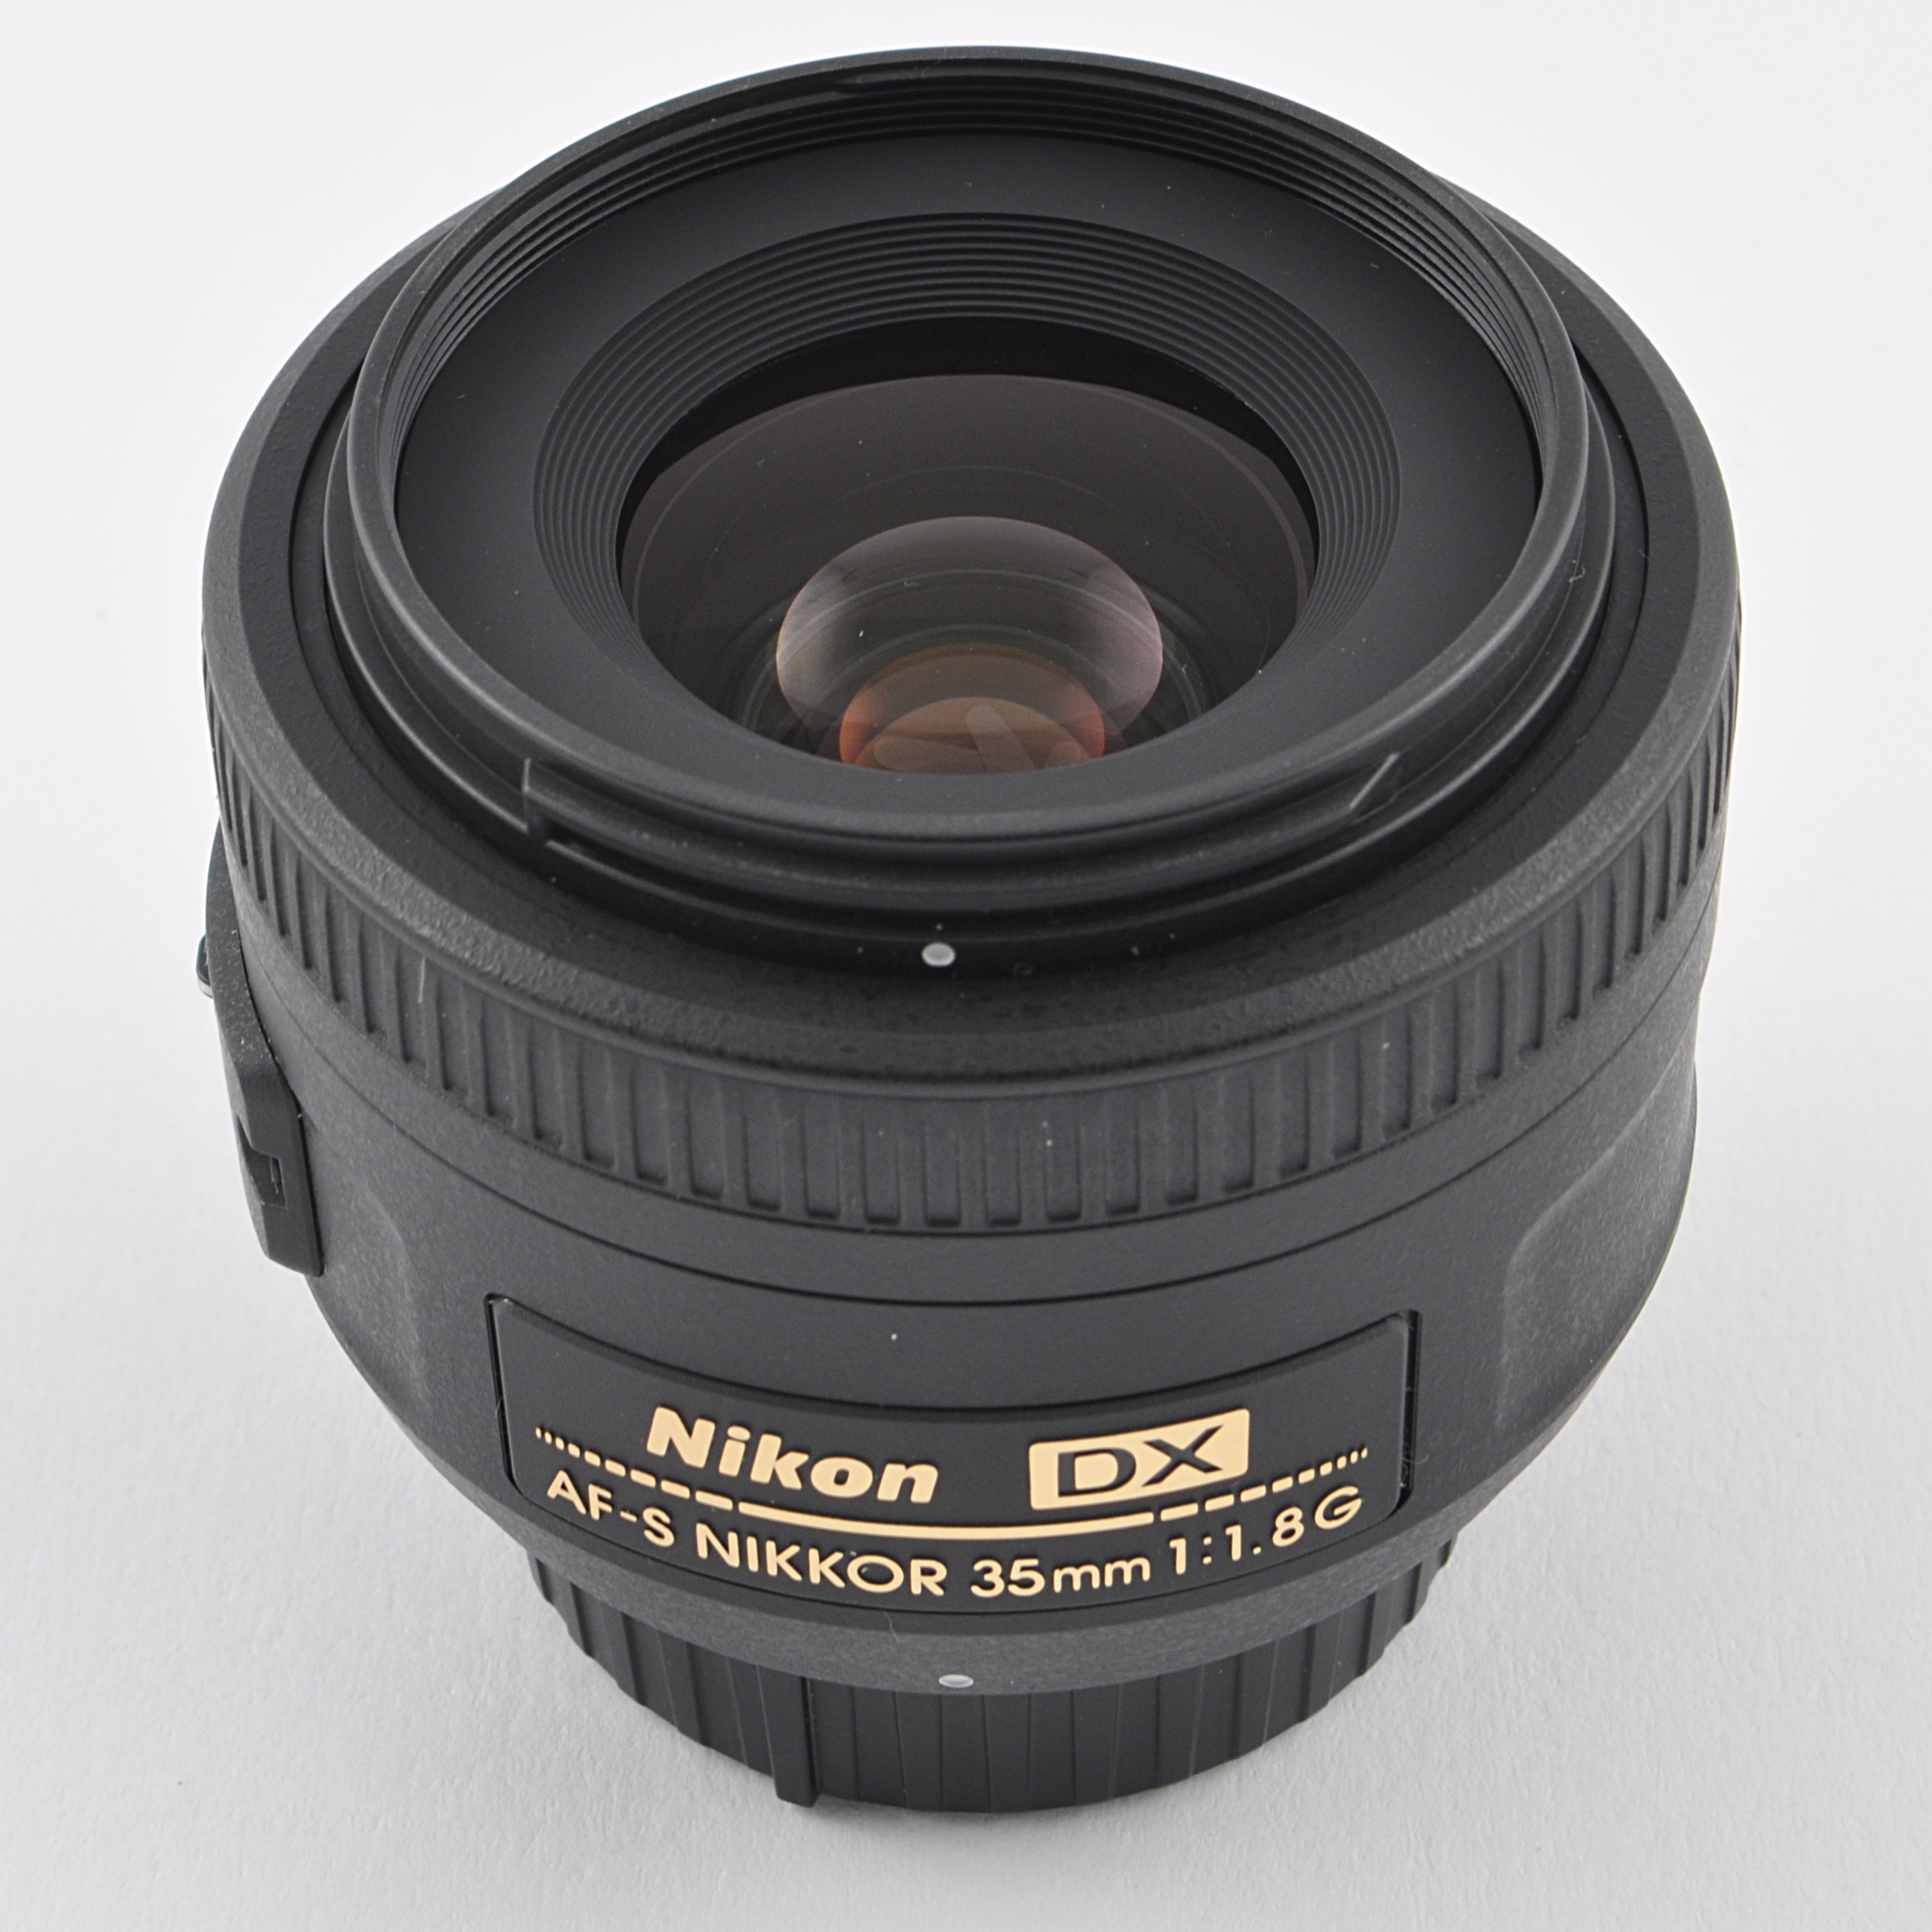 Nikon nikkor 35mm f 1.8 g. Nikon 35mm f/1.8g. Nikon 35mm f/1.8g af-s DX Nikkor. Nikon DX: Nikon 35mm f/1.8. Объектив Nikon 35mm f/1.8g af-s DX Nikkor, черный.